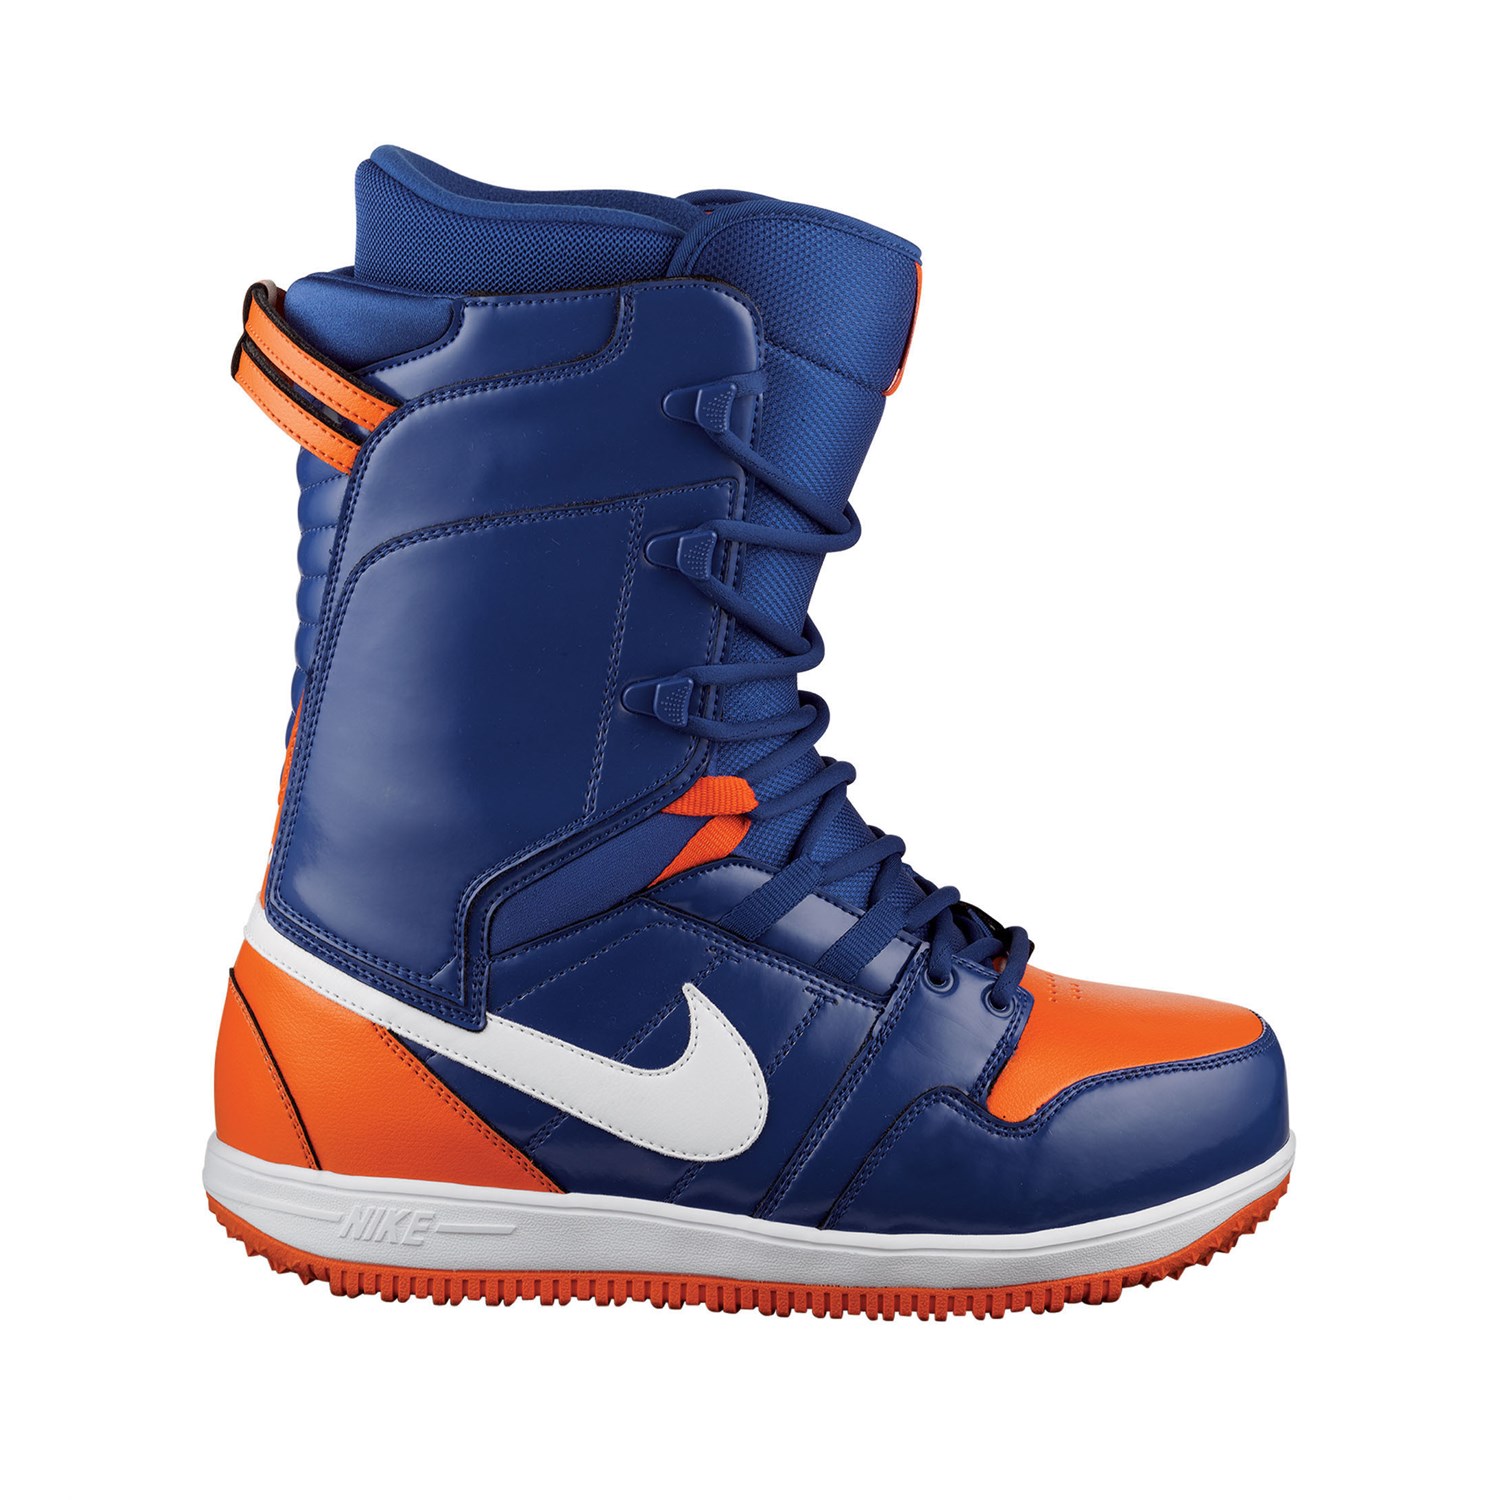 Nike Vapen Boots 2012 |